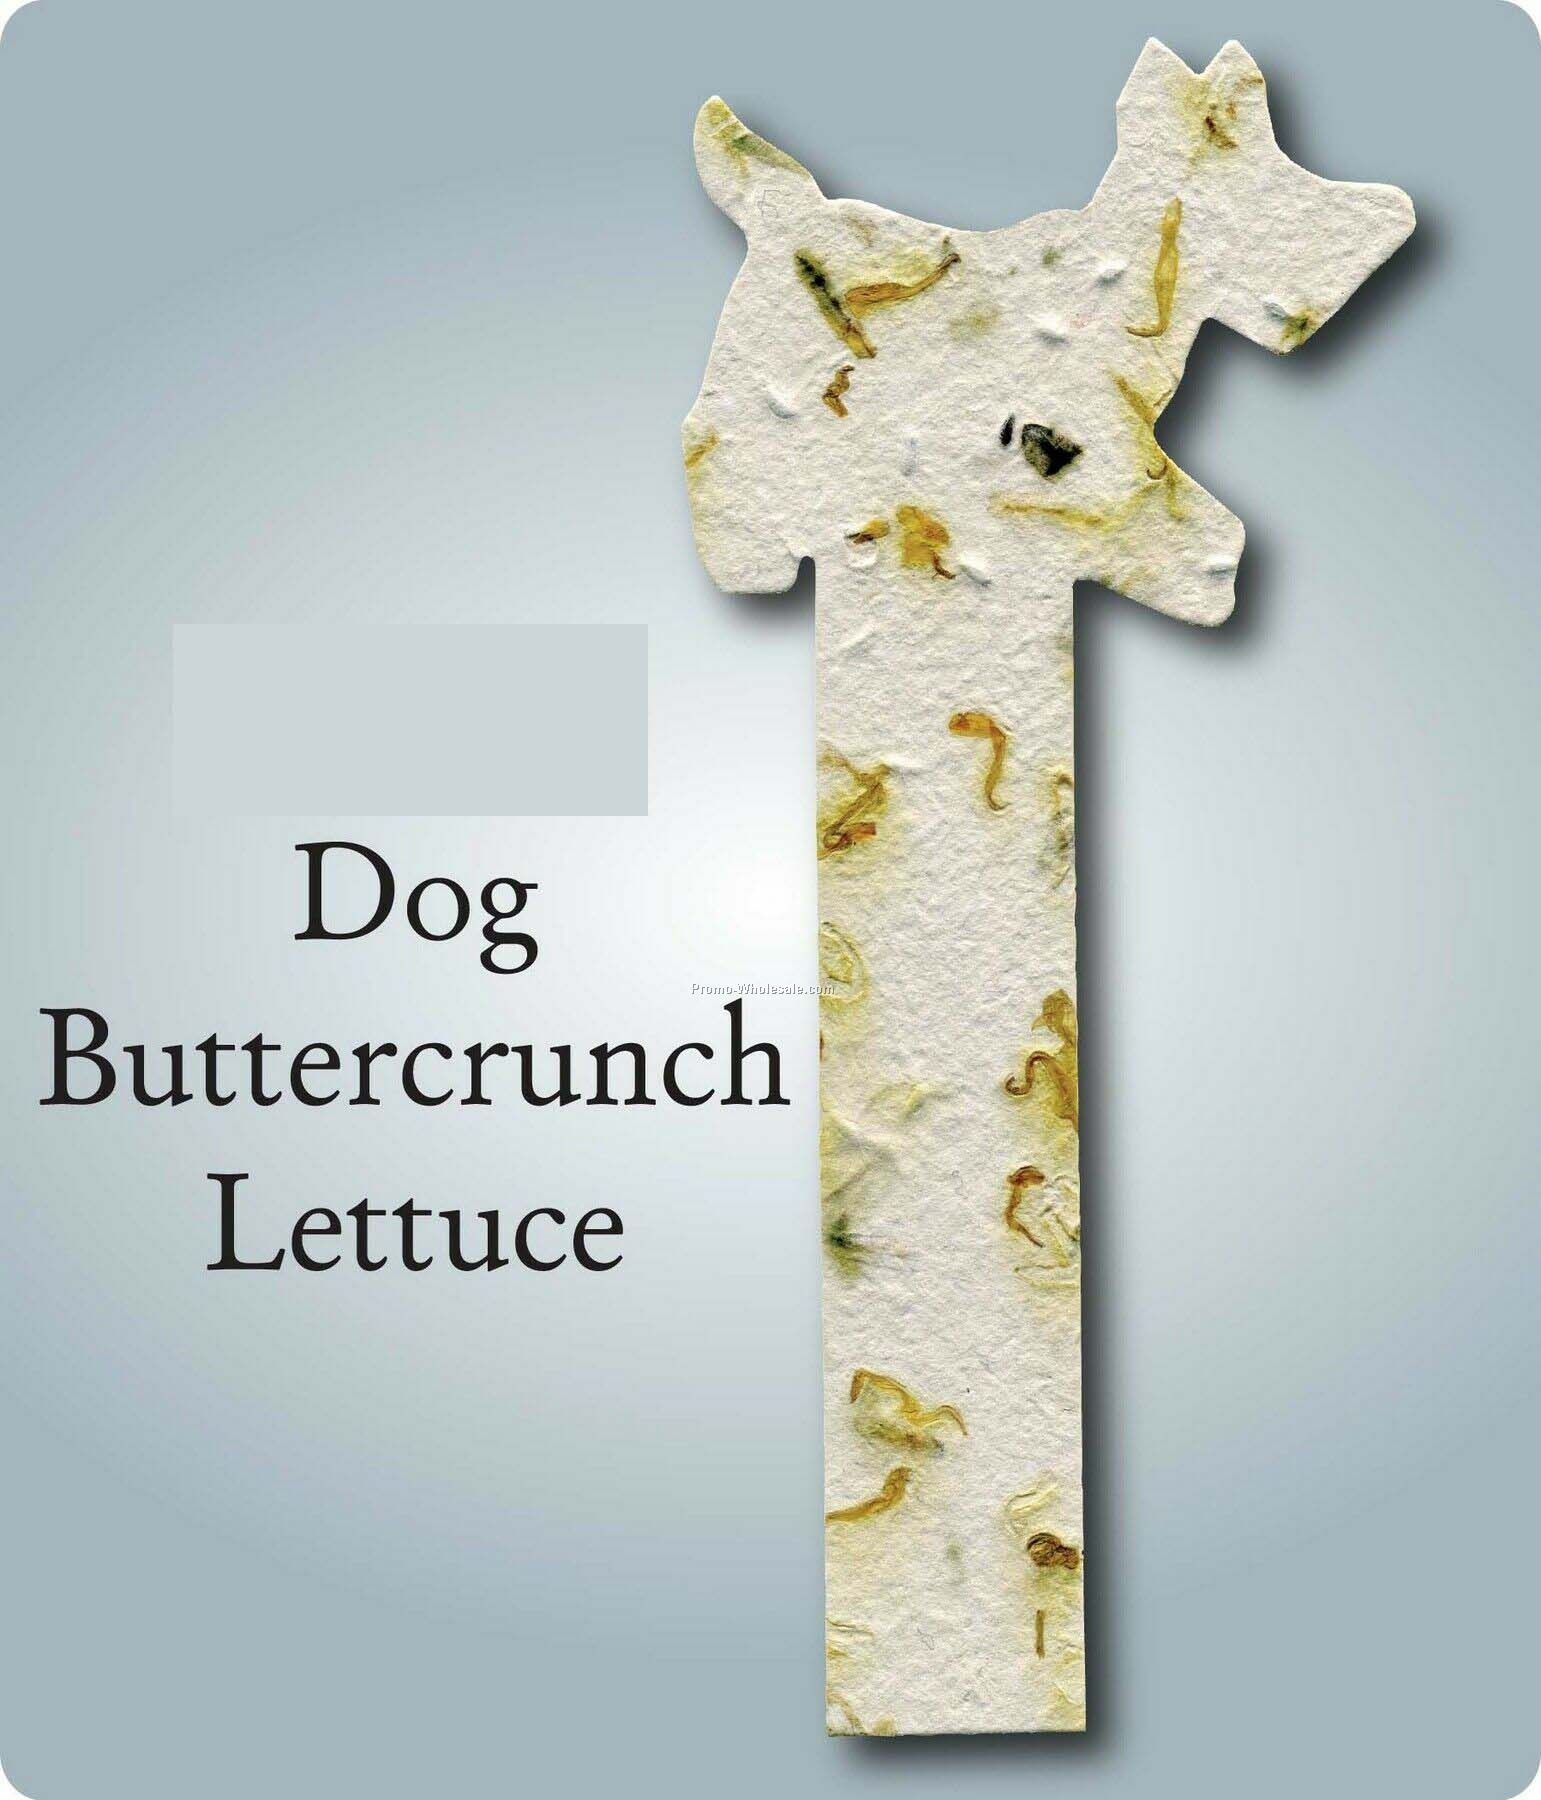 Dog Shape Bookmark Embedded W/ Buttercrunch Lettuce Seed